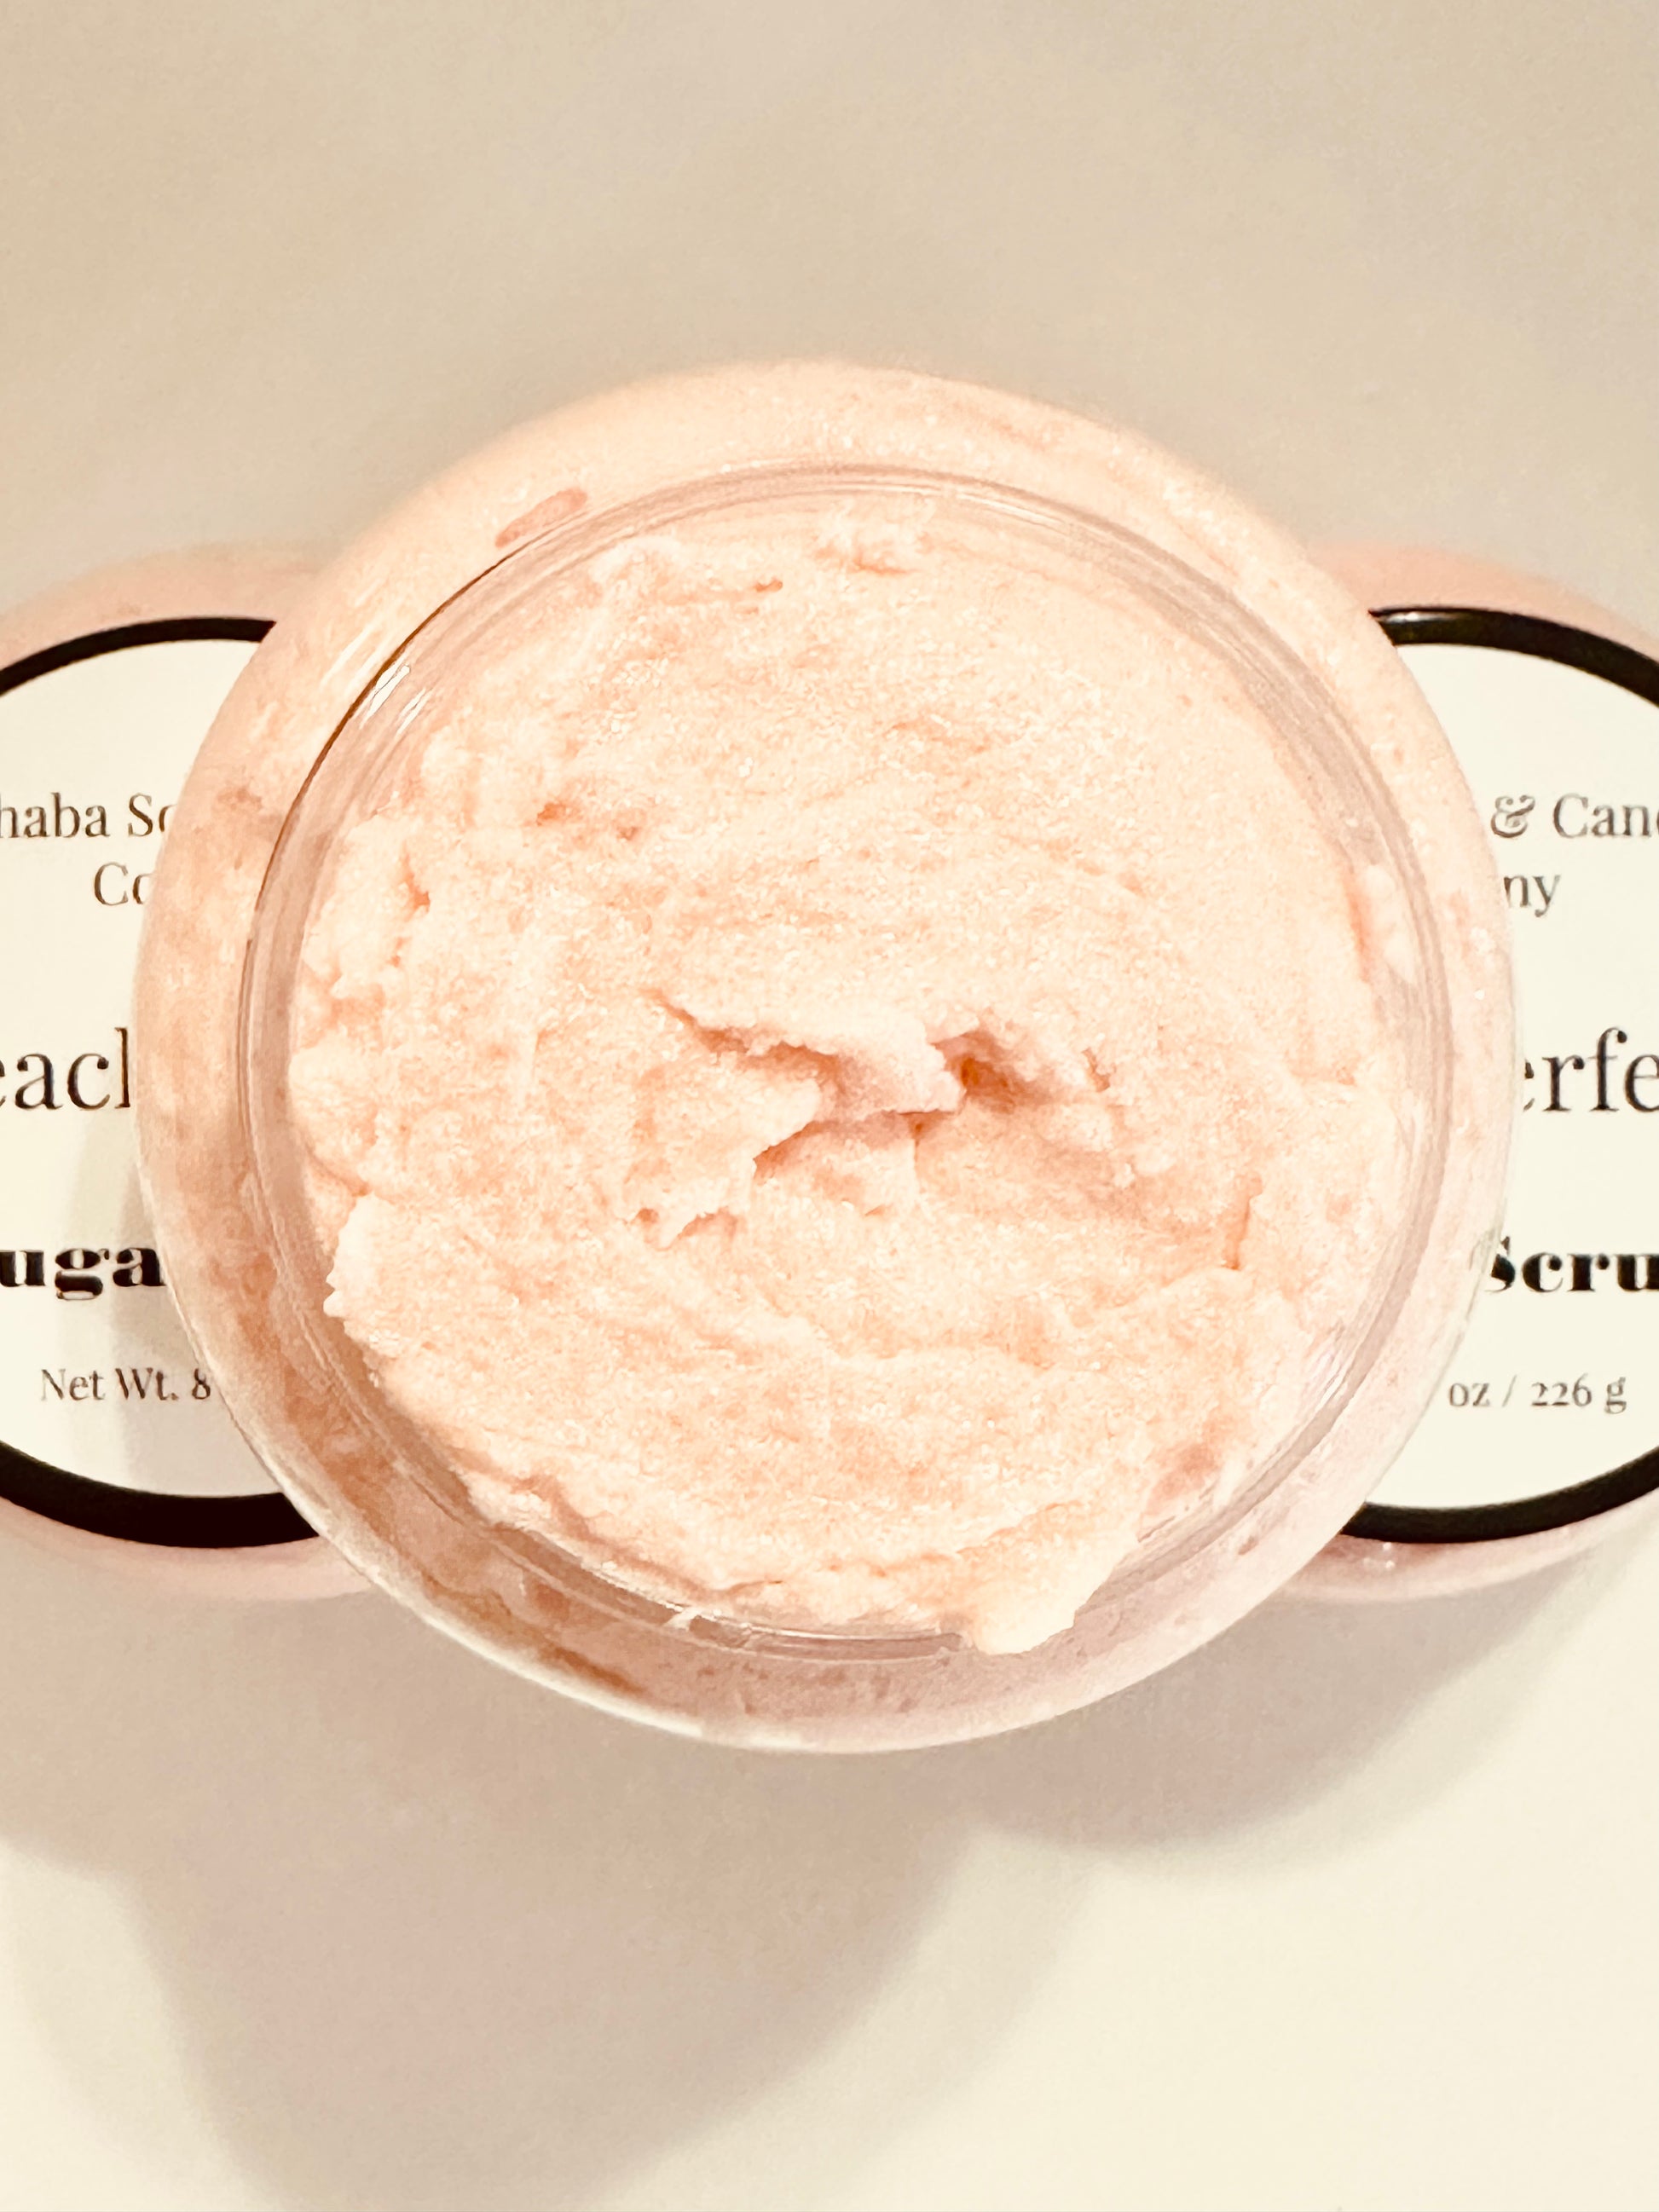 Peach Perfect Sugar Scrubs - Cahaba Soap and Candle Company